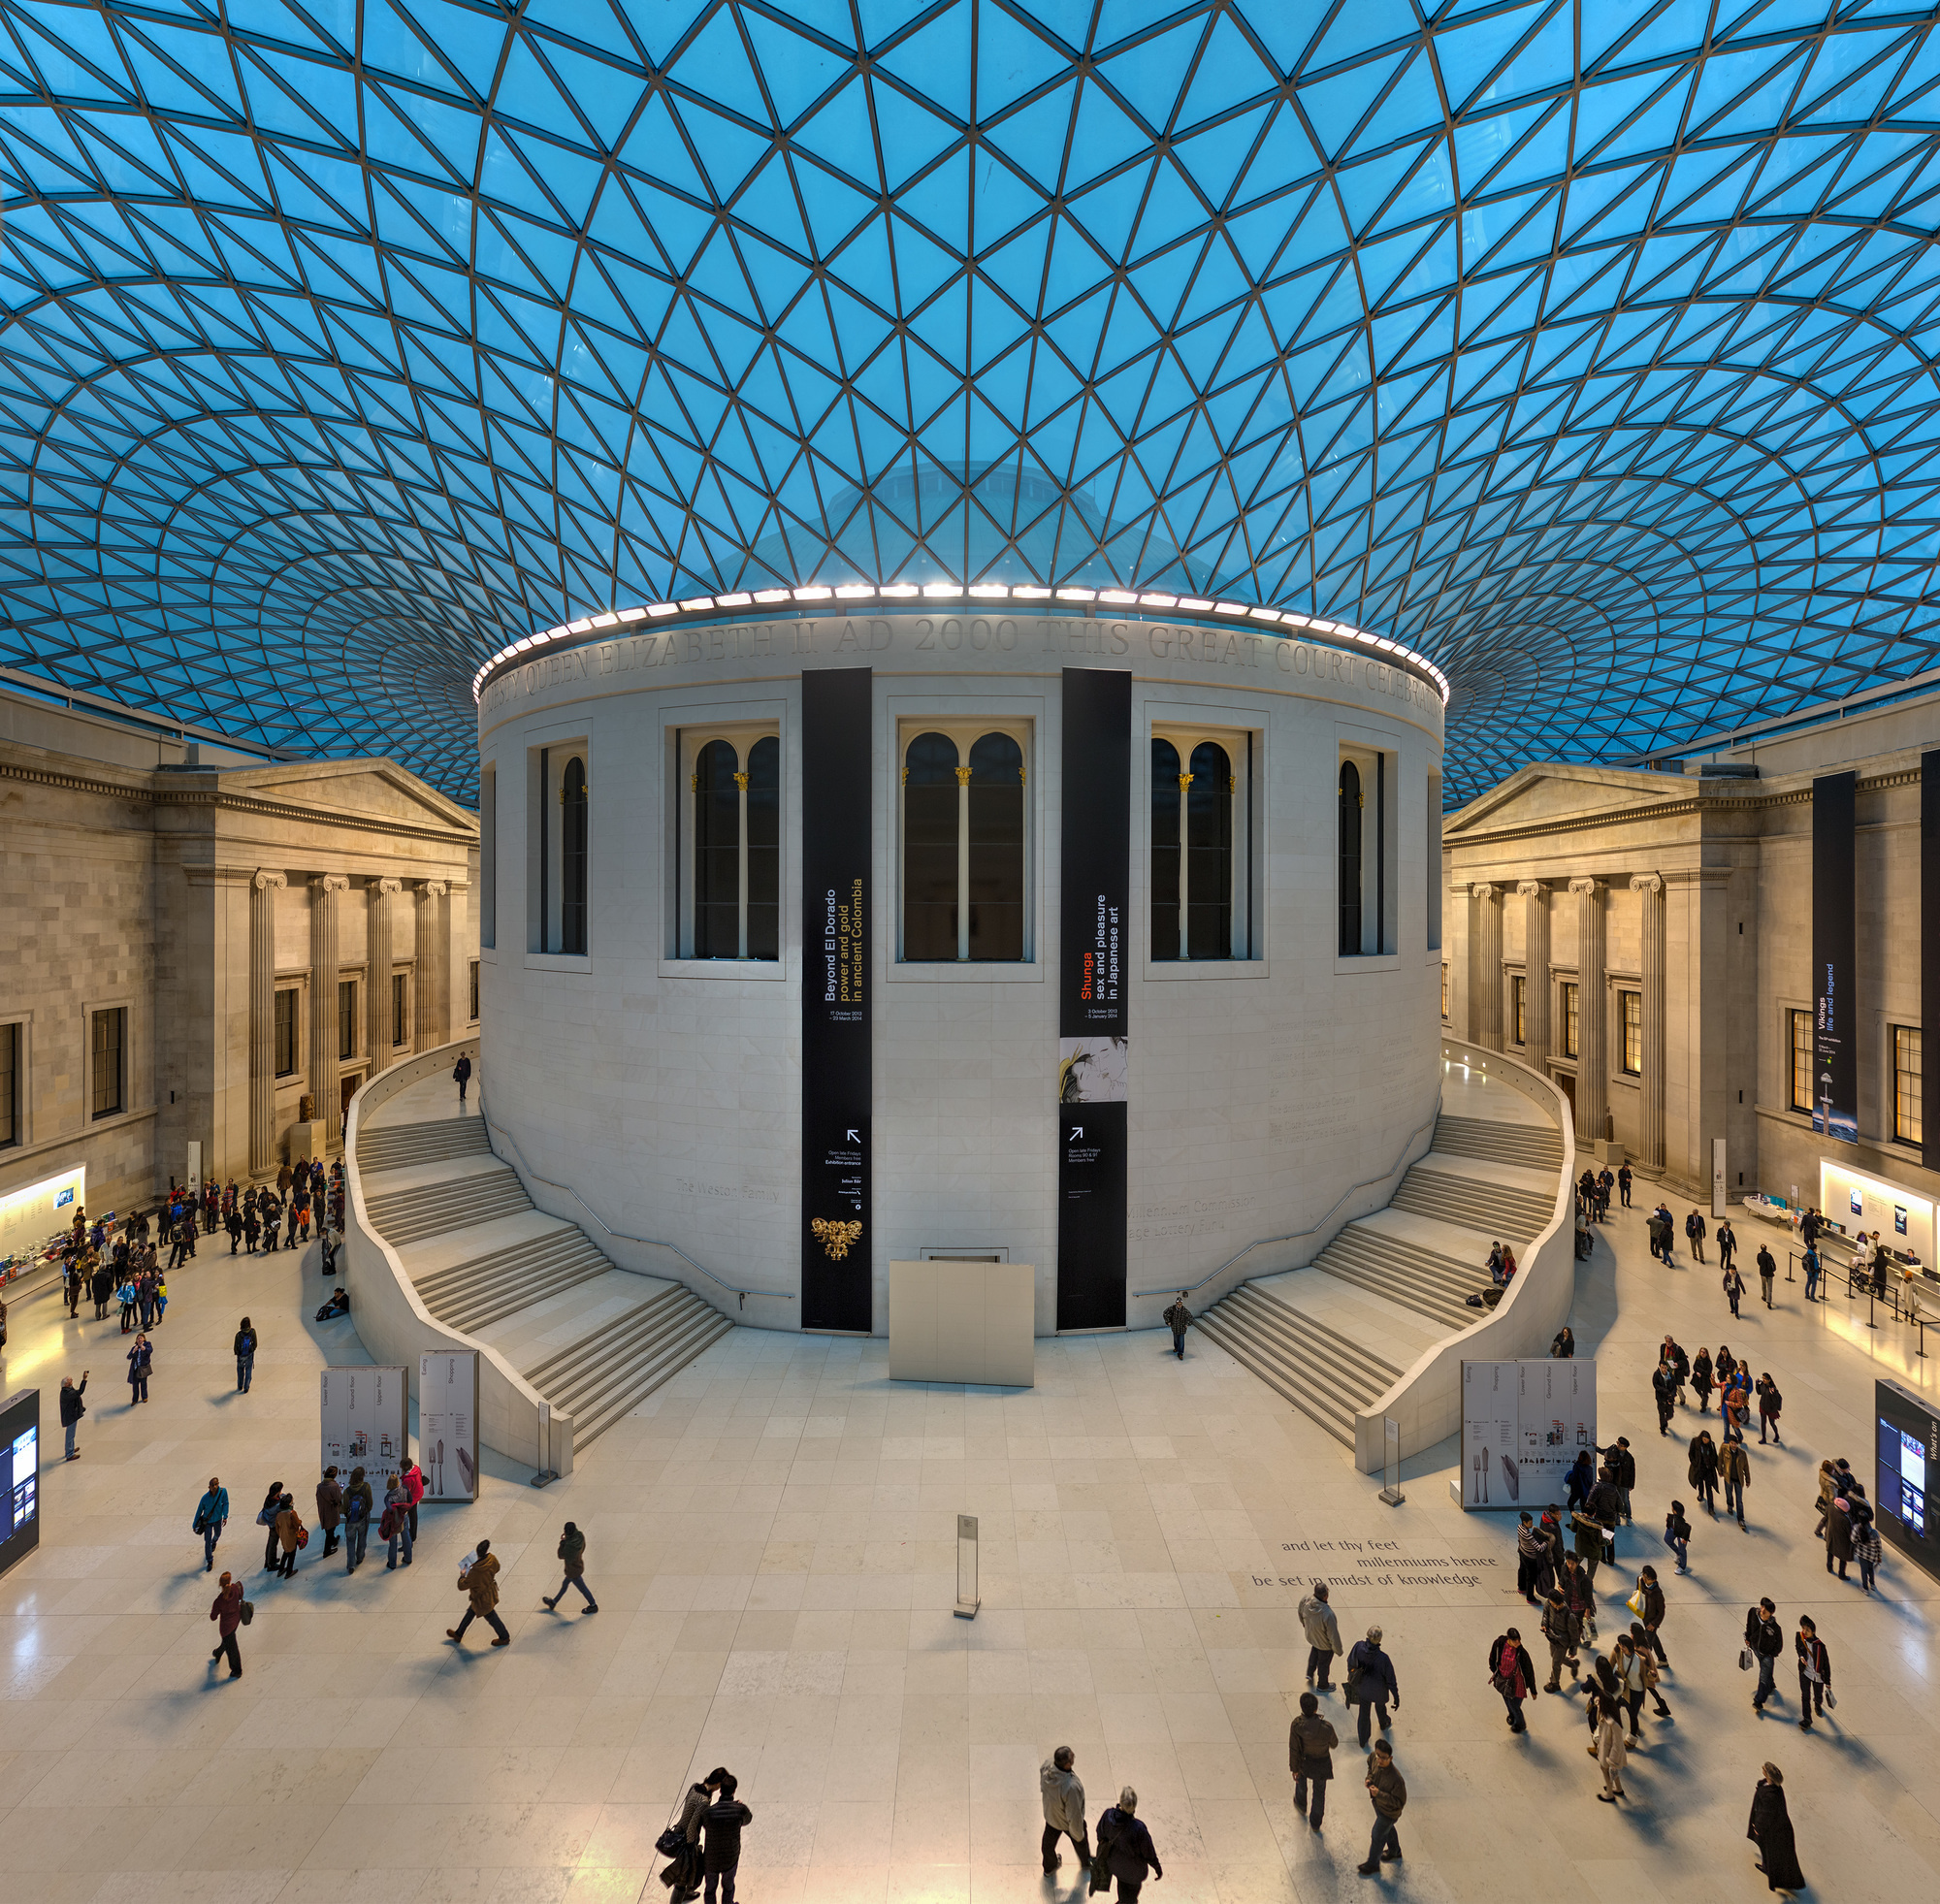 大英博物馆巨堂 (British Museum Great Court), 英国伦敦